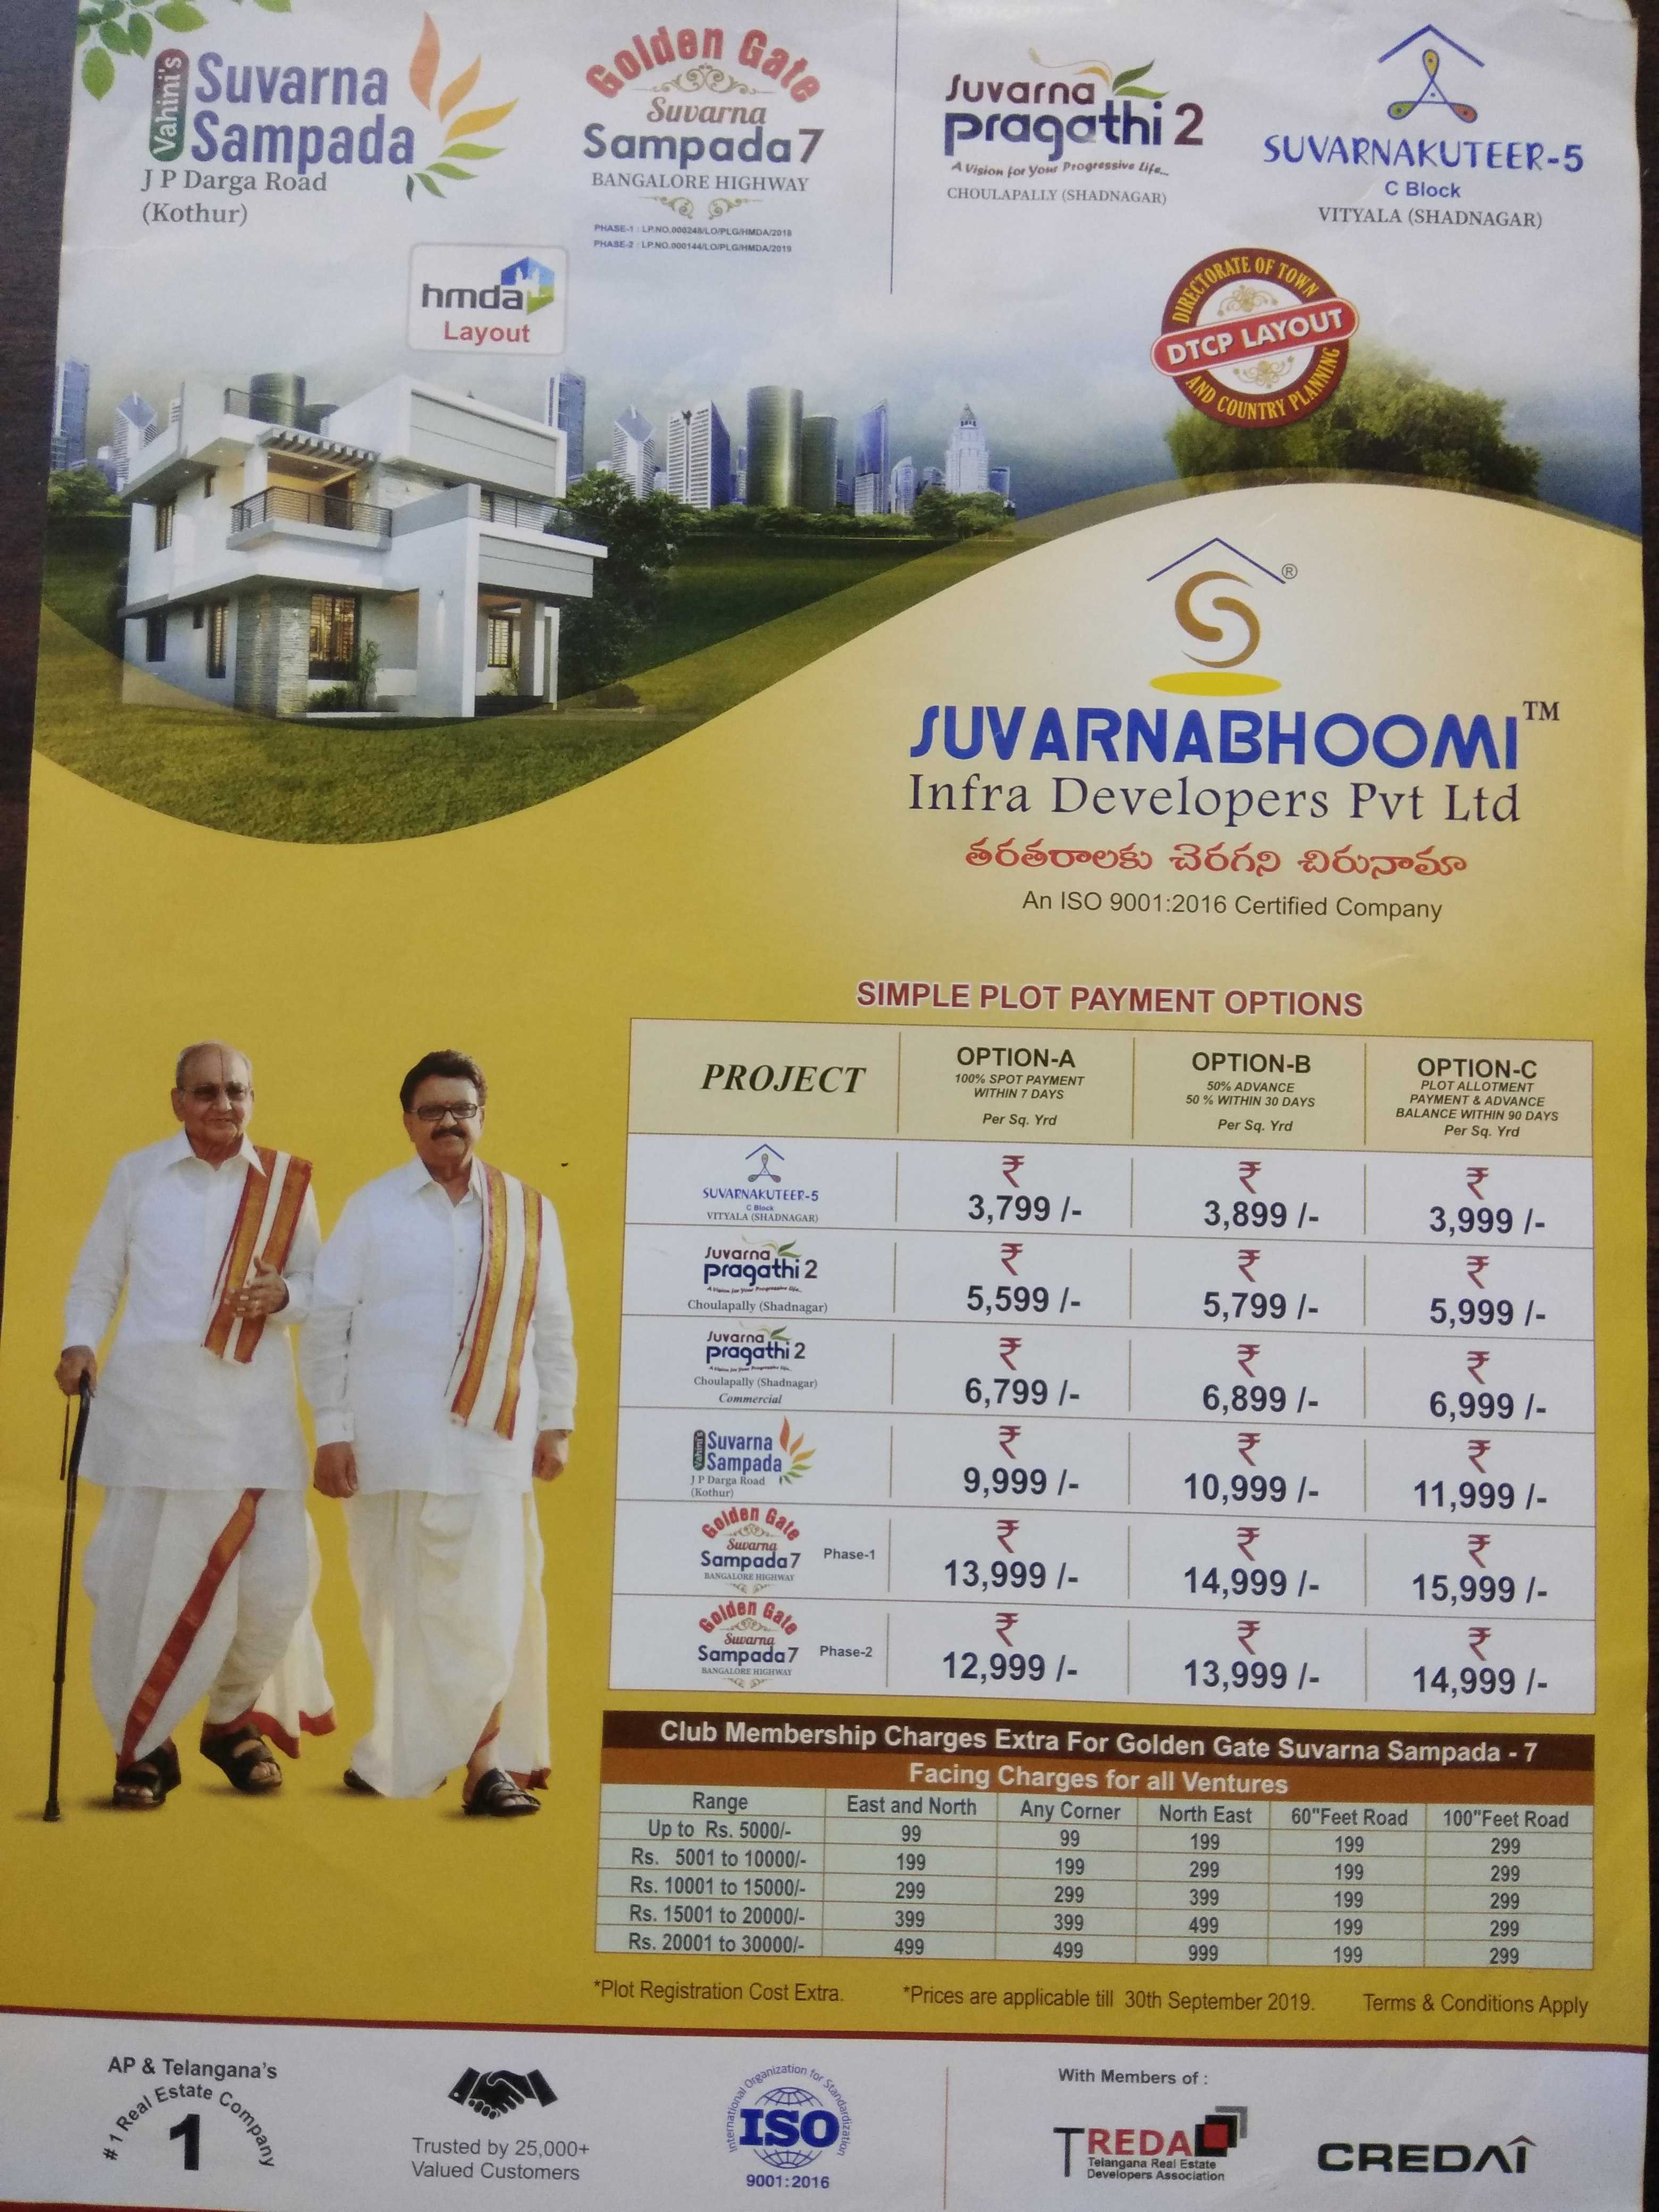 Suvarnabhoomi Infra Developers Pvt Ltd